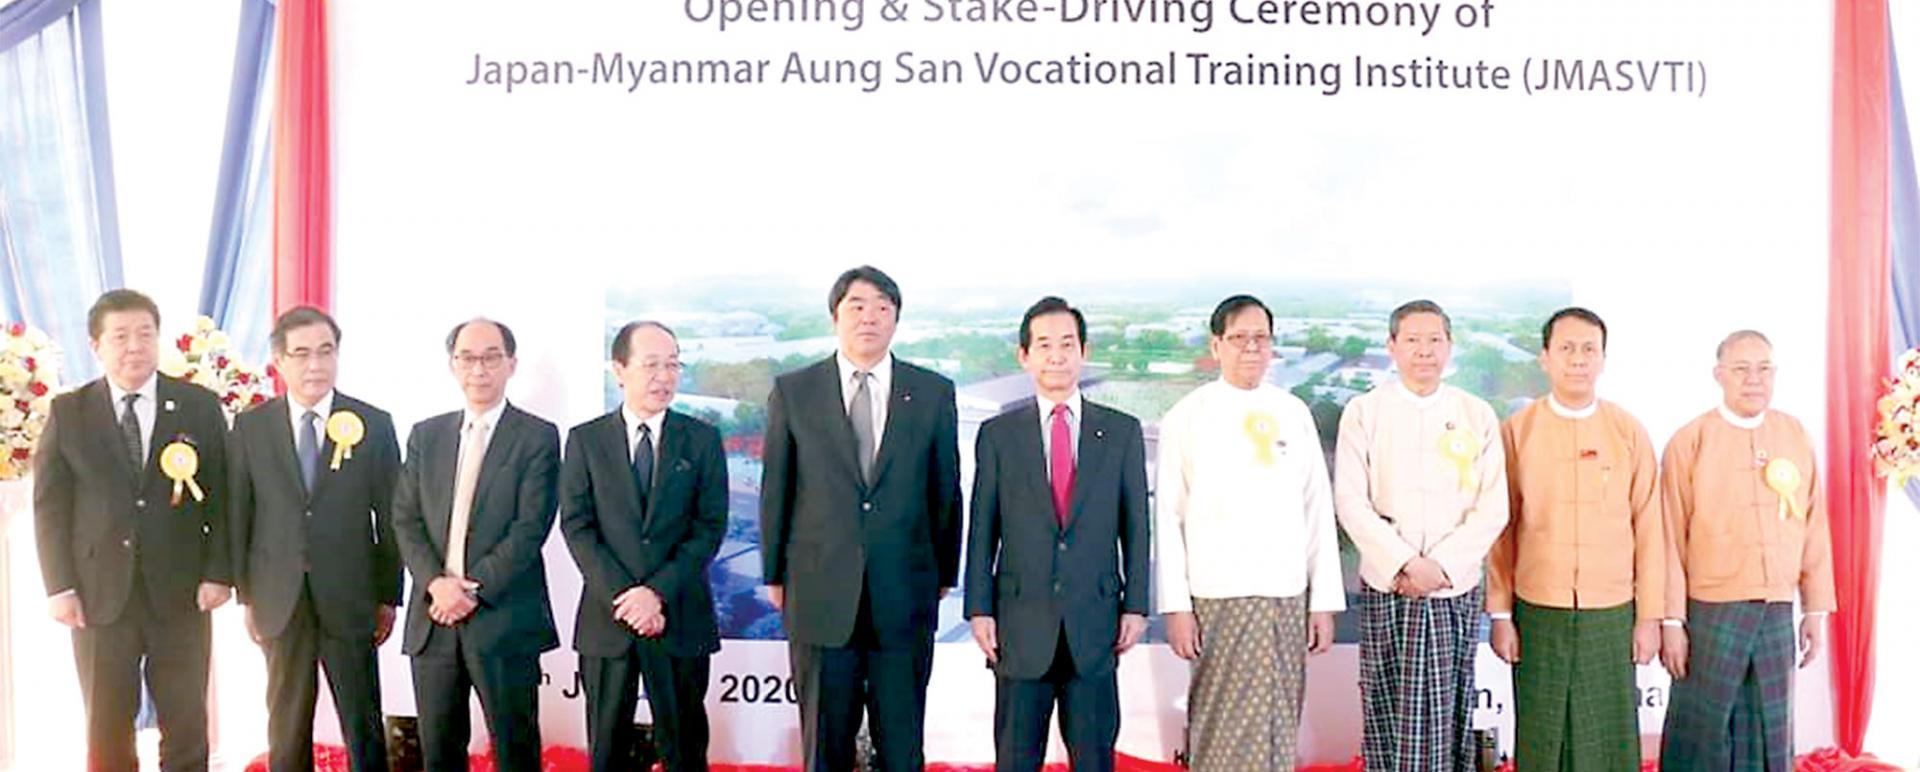 Japan – Myanmar Aung San Vocational Training Institute (JMASVTI) was opened in Singu Ward, Insein Township 